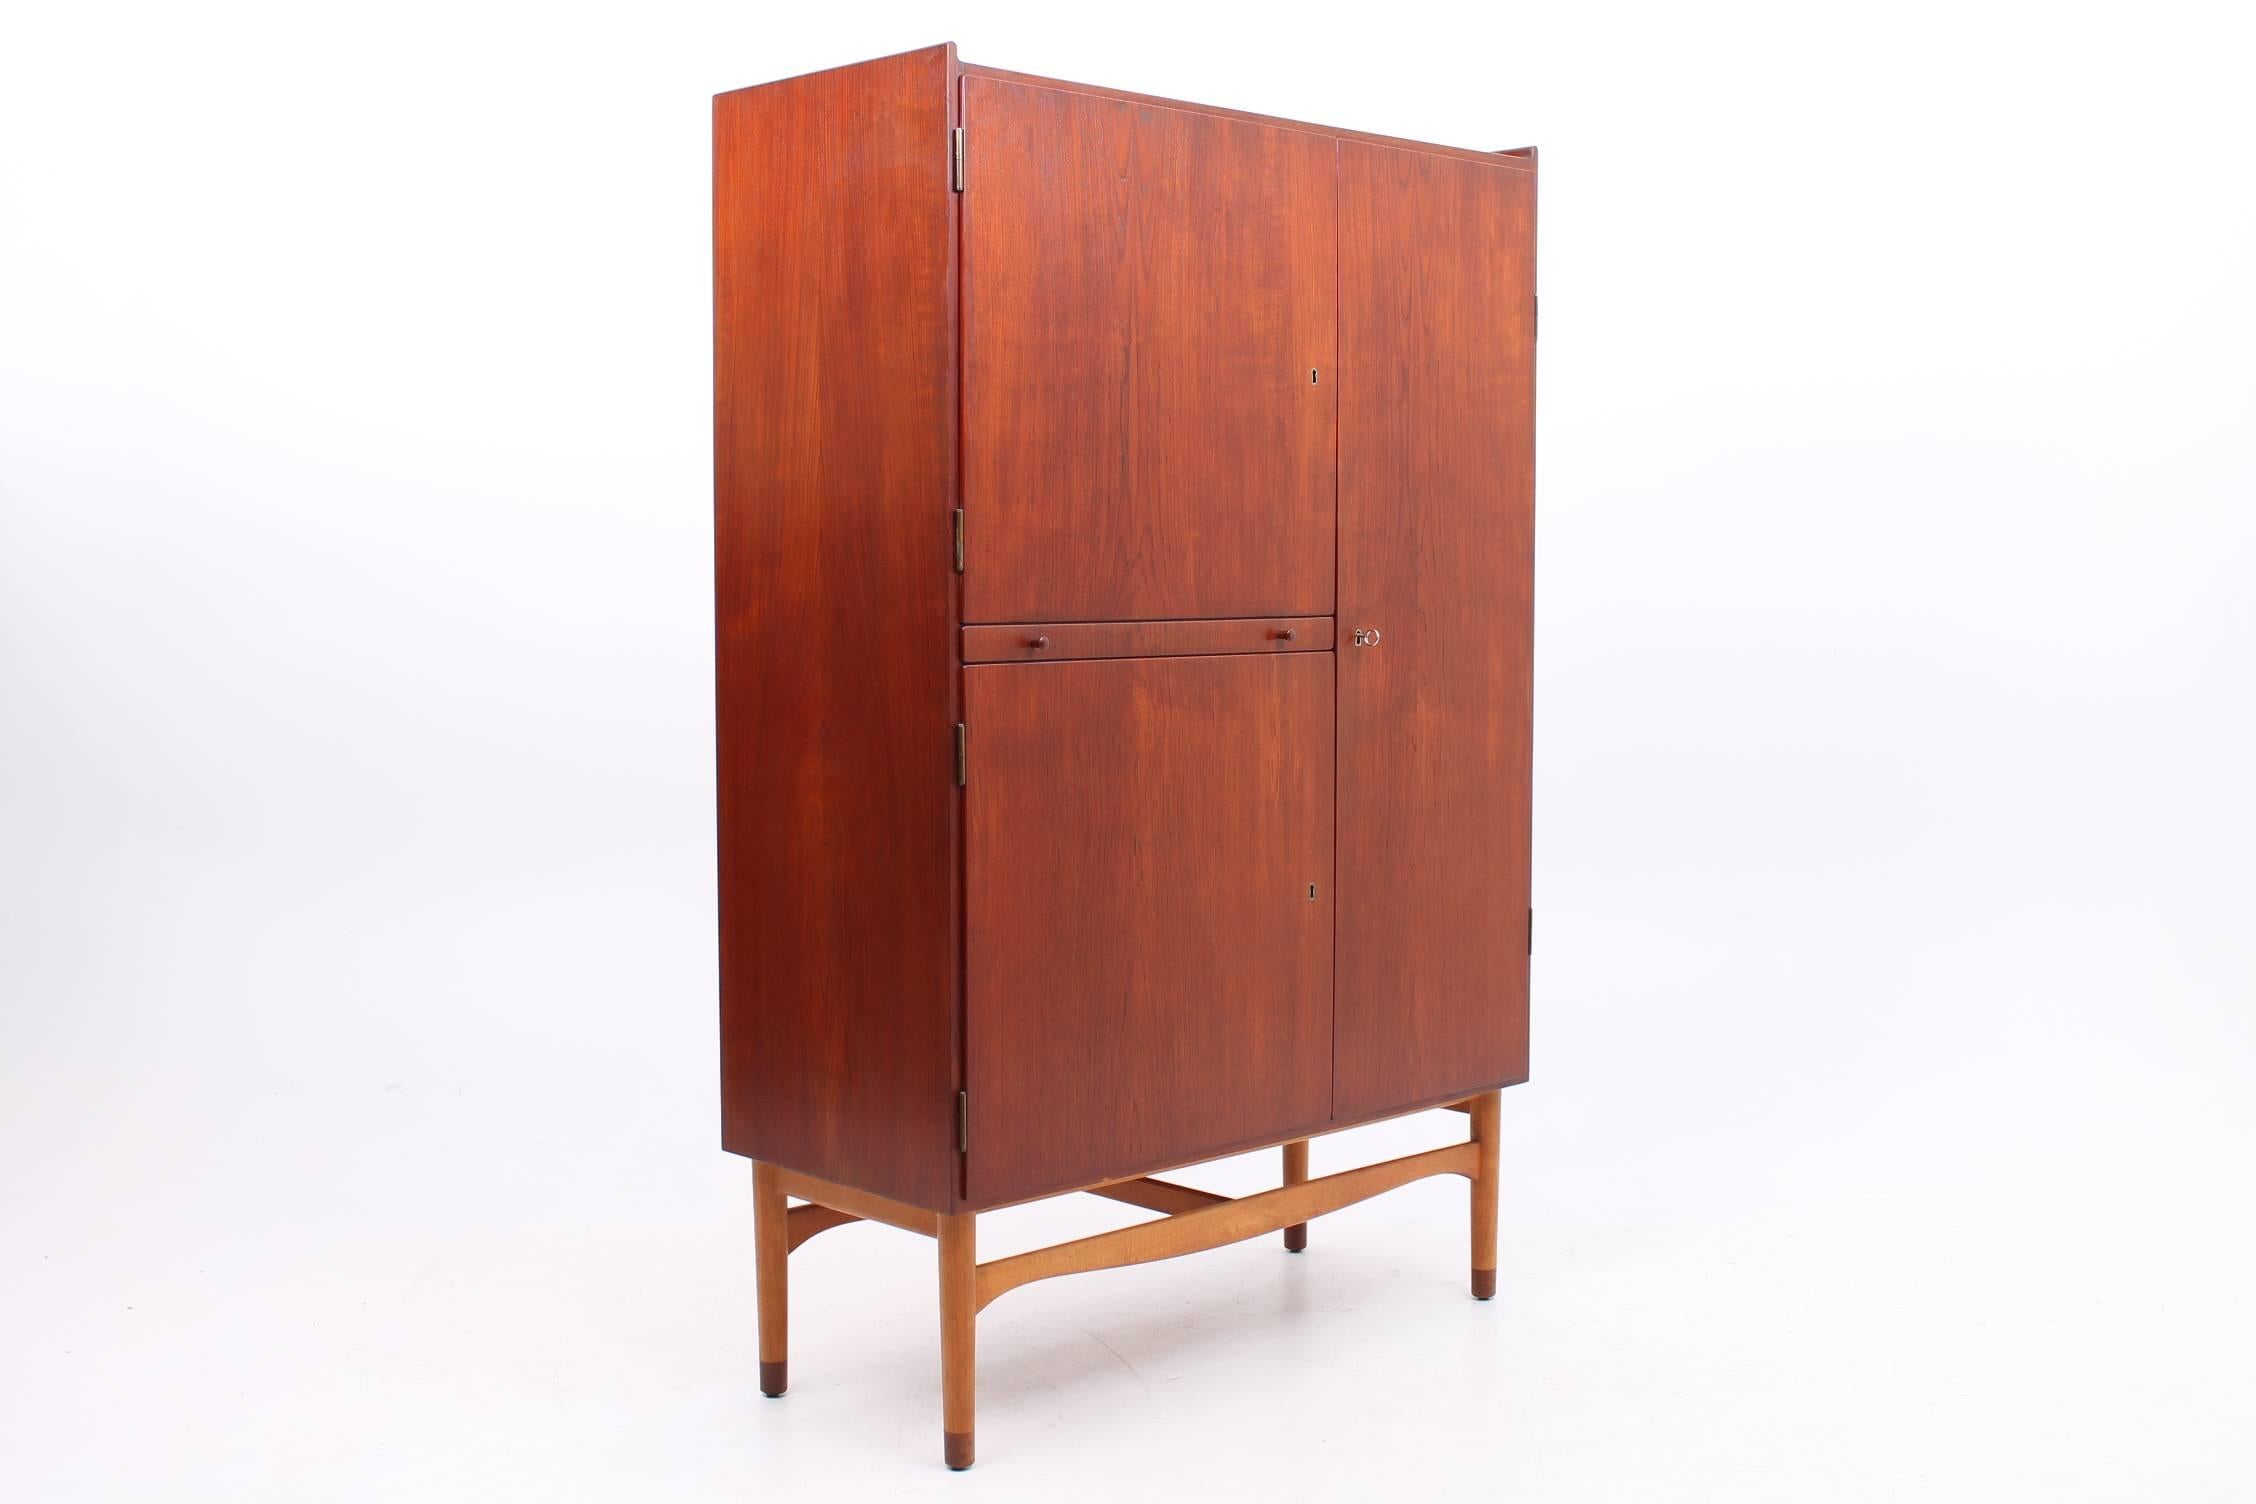 Scandinavian Modern Rare Teak and Beech Cabinet/Wardrobe by Finn Juhl for Bovirke, 1950s For Sale